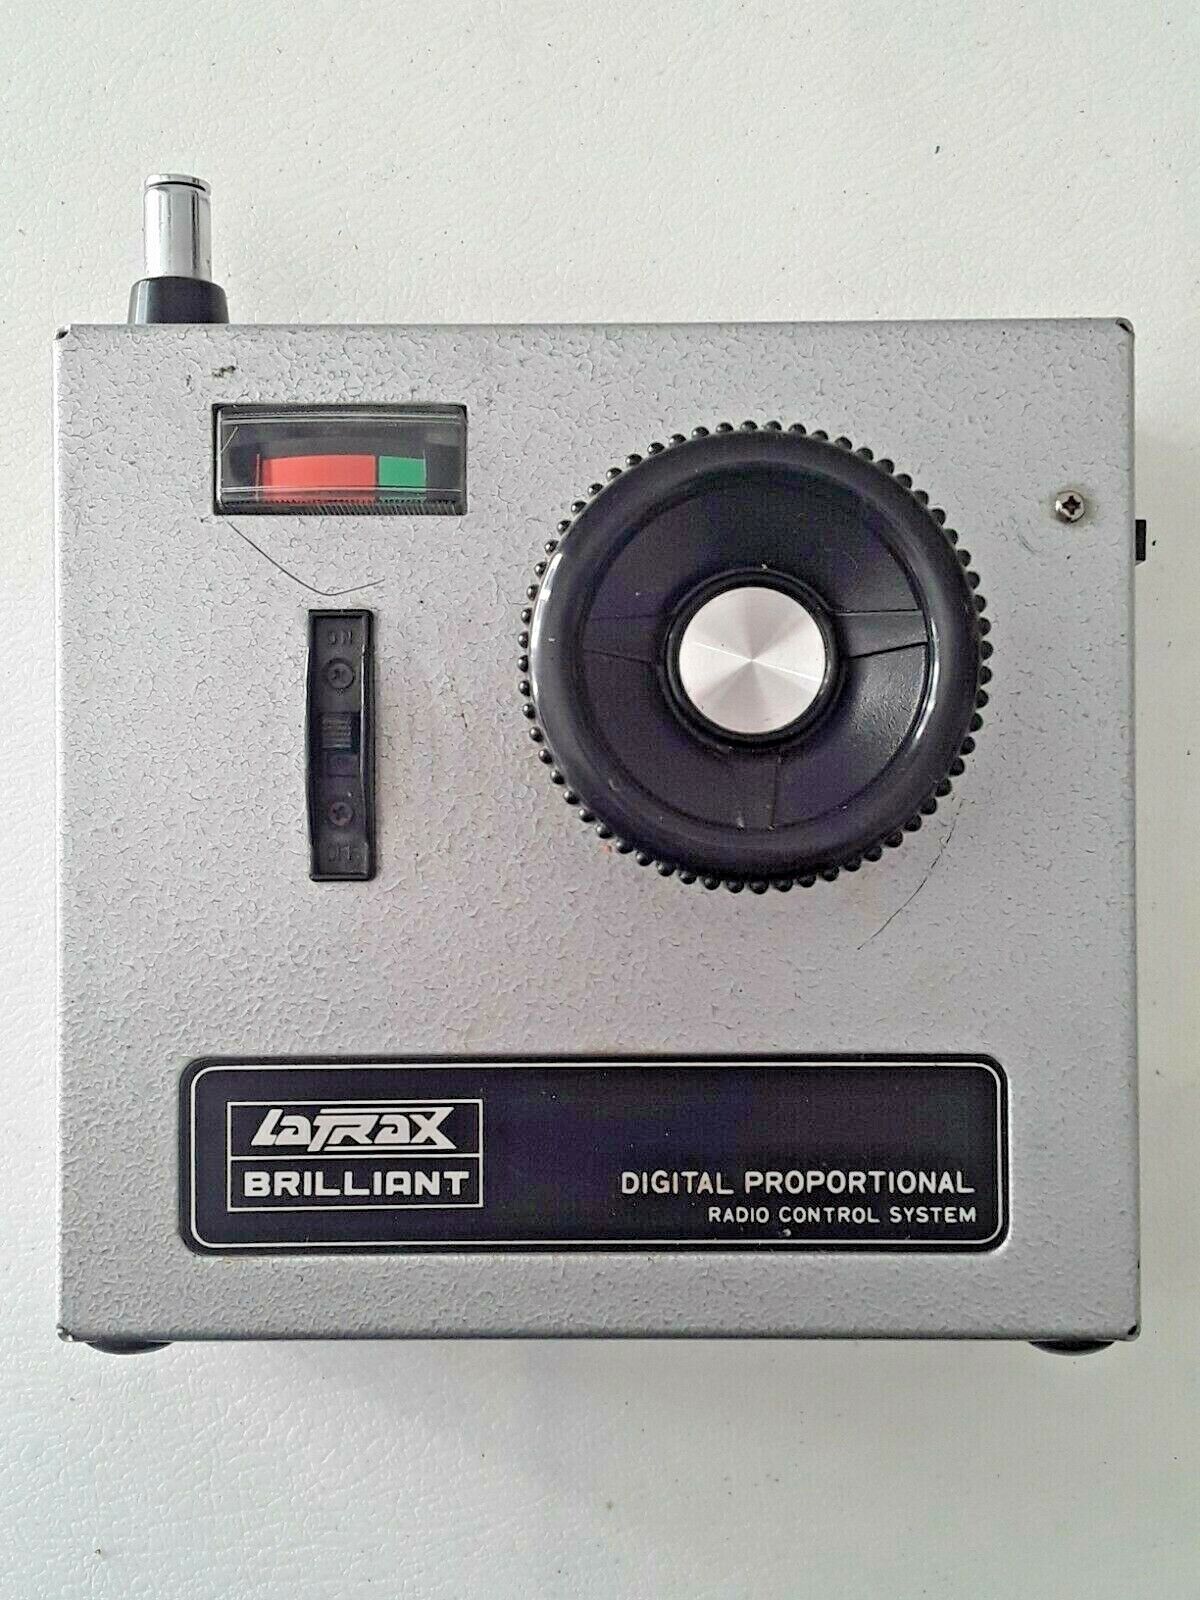 Latrax Brilliant Genuine Free Shipping Proportion RC Control System Radio R Max 54% OFF